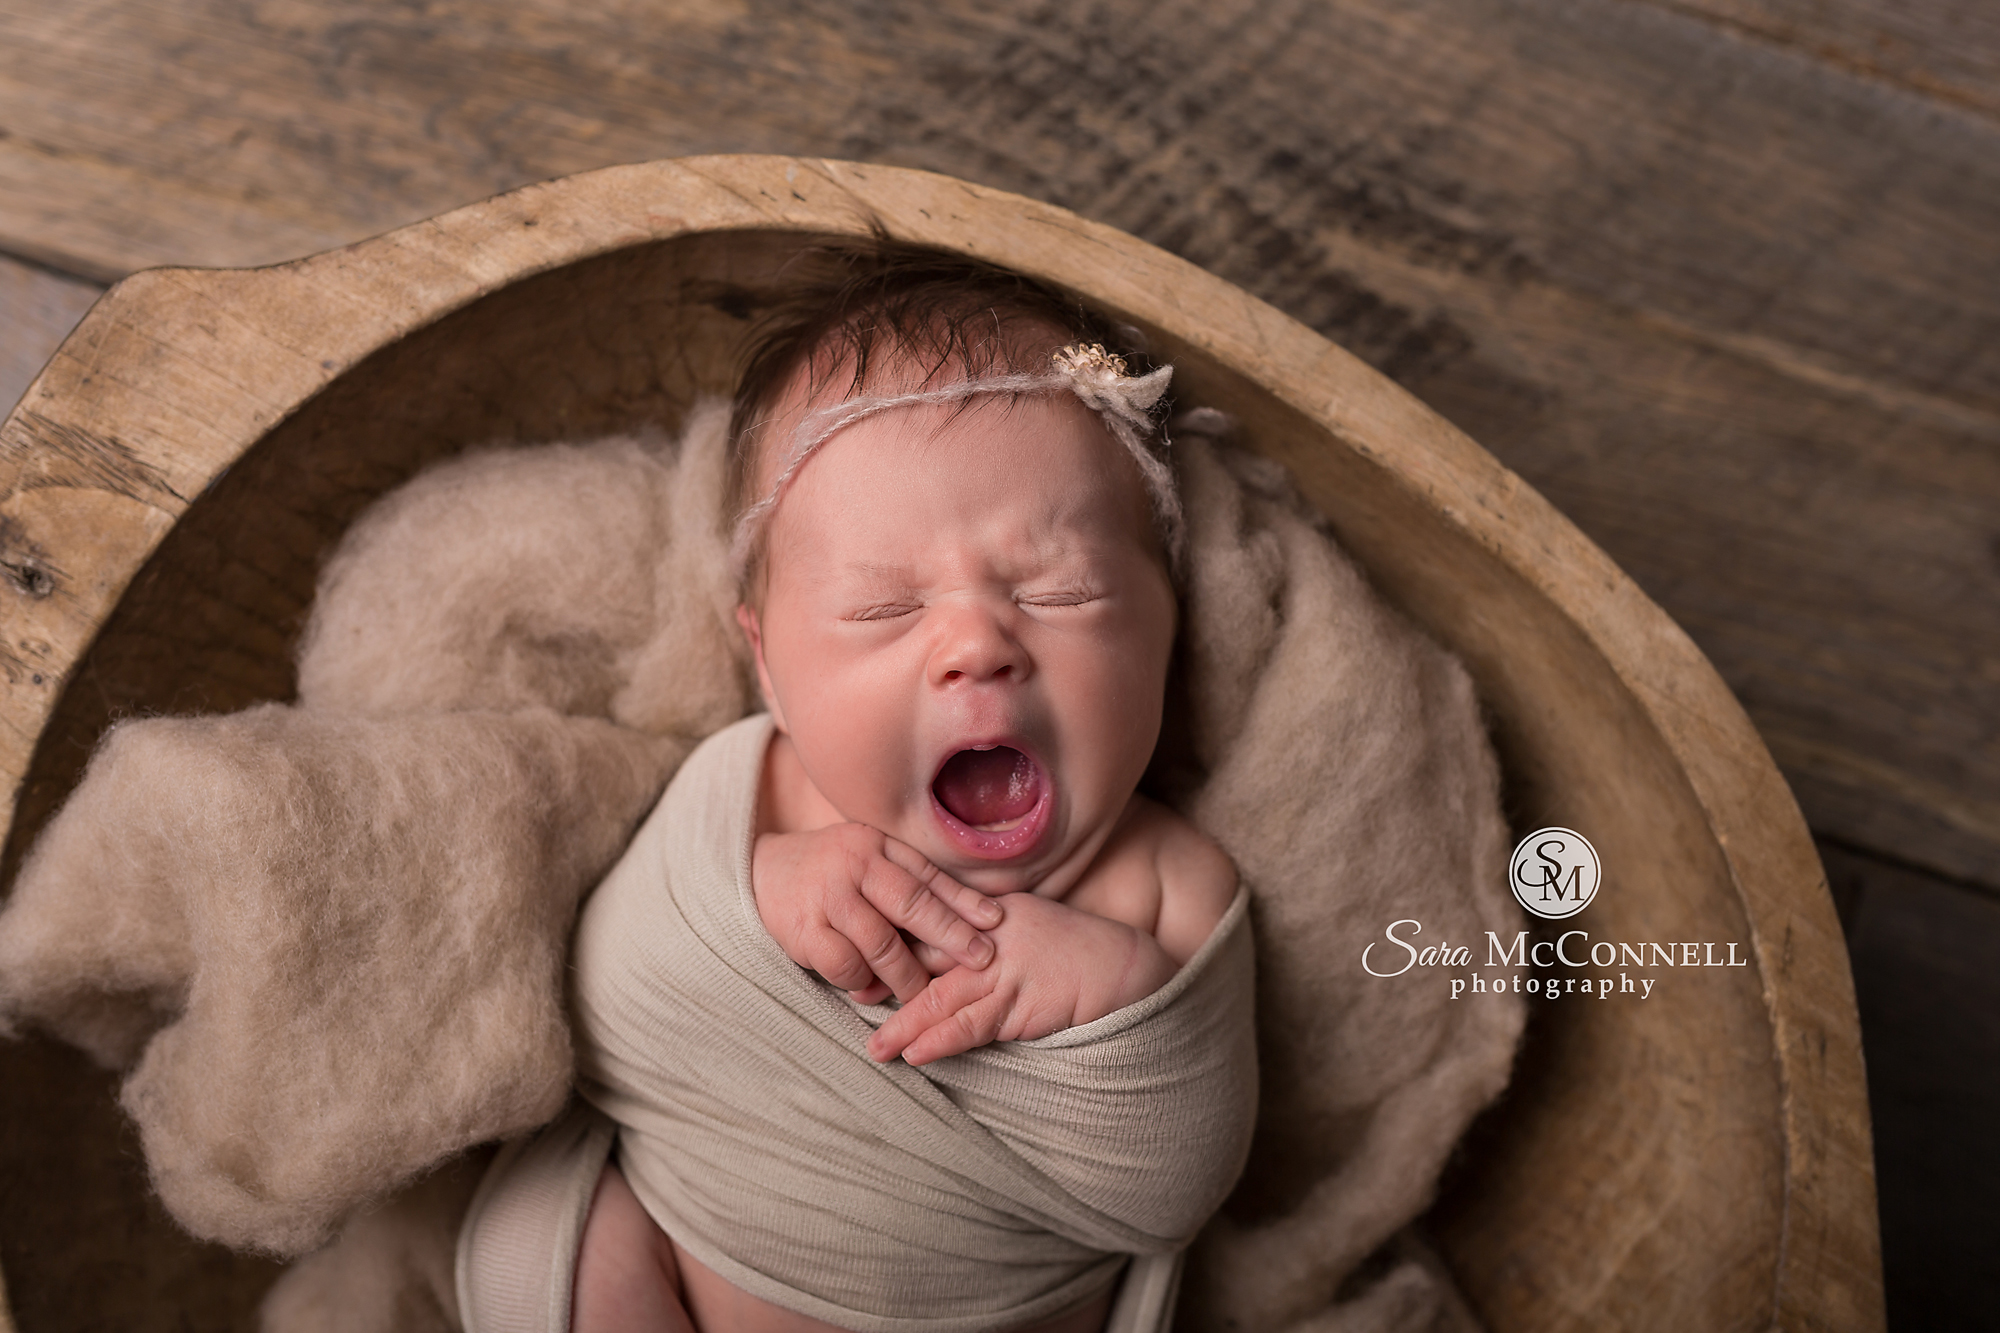 Ottawa Newborn Photographer | Why these professional photos were important